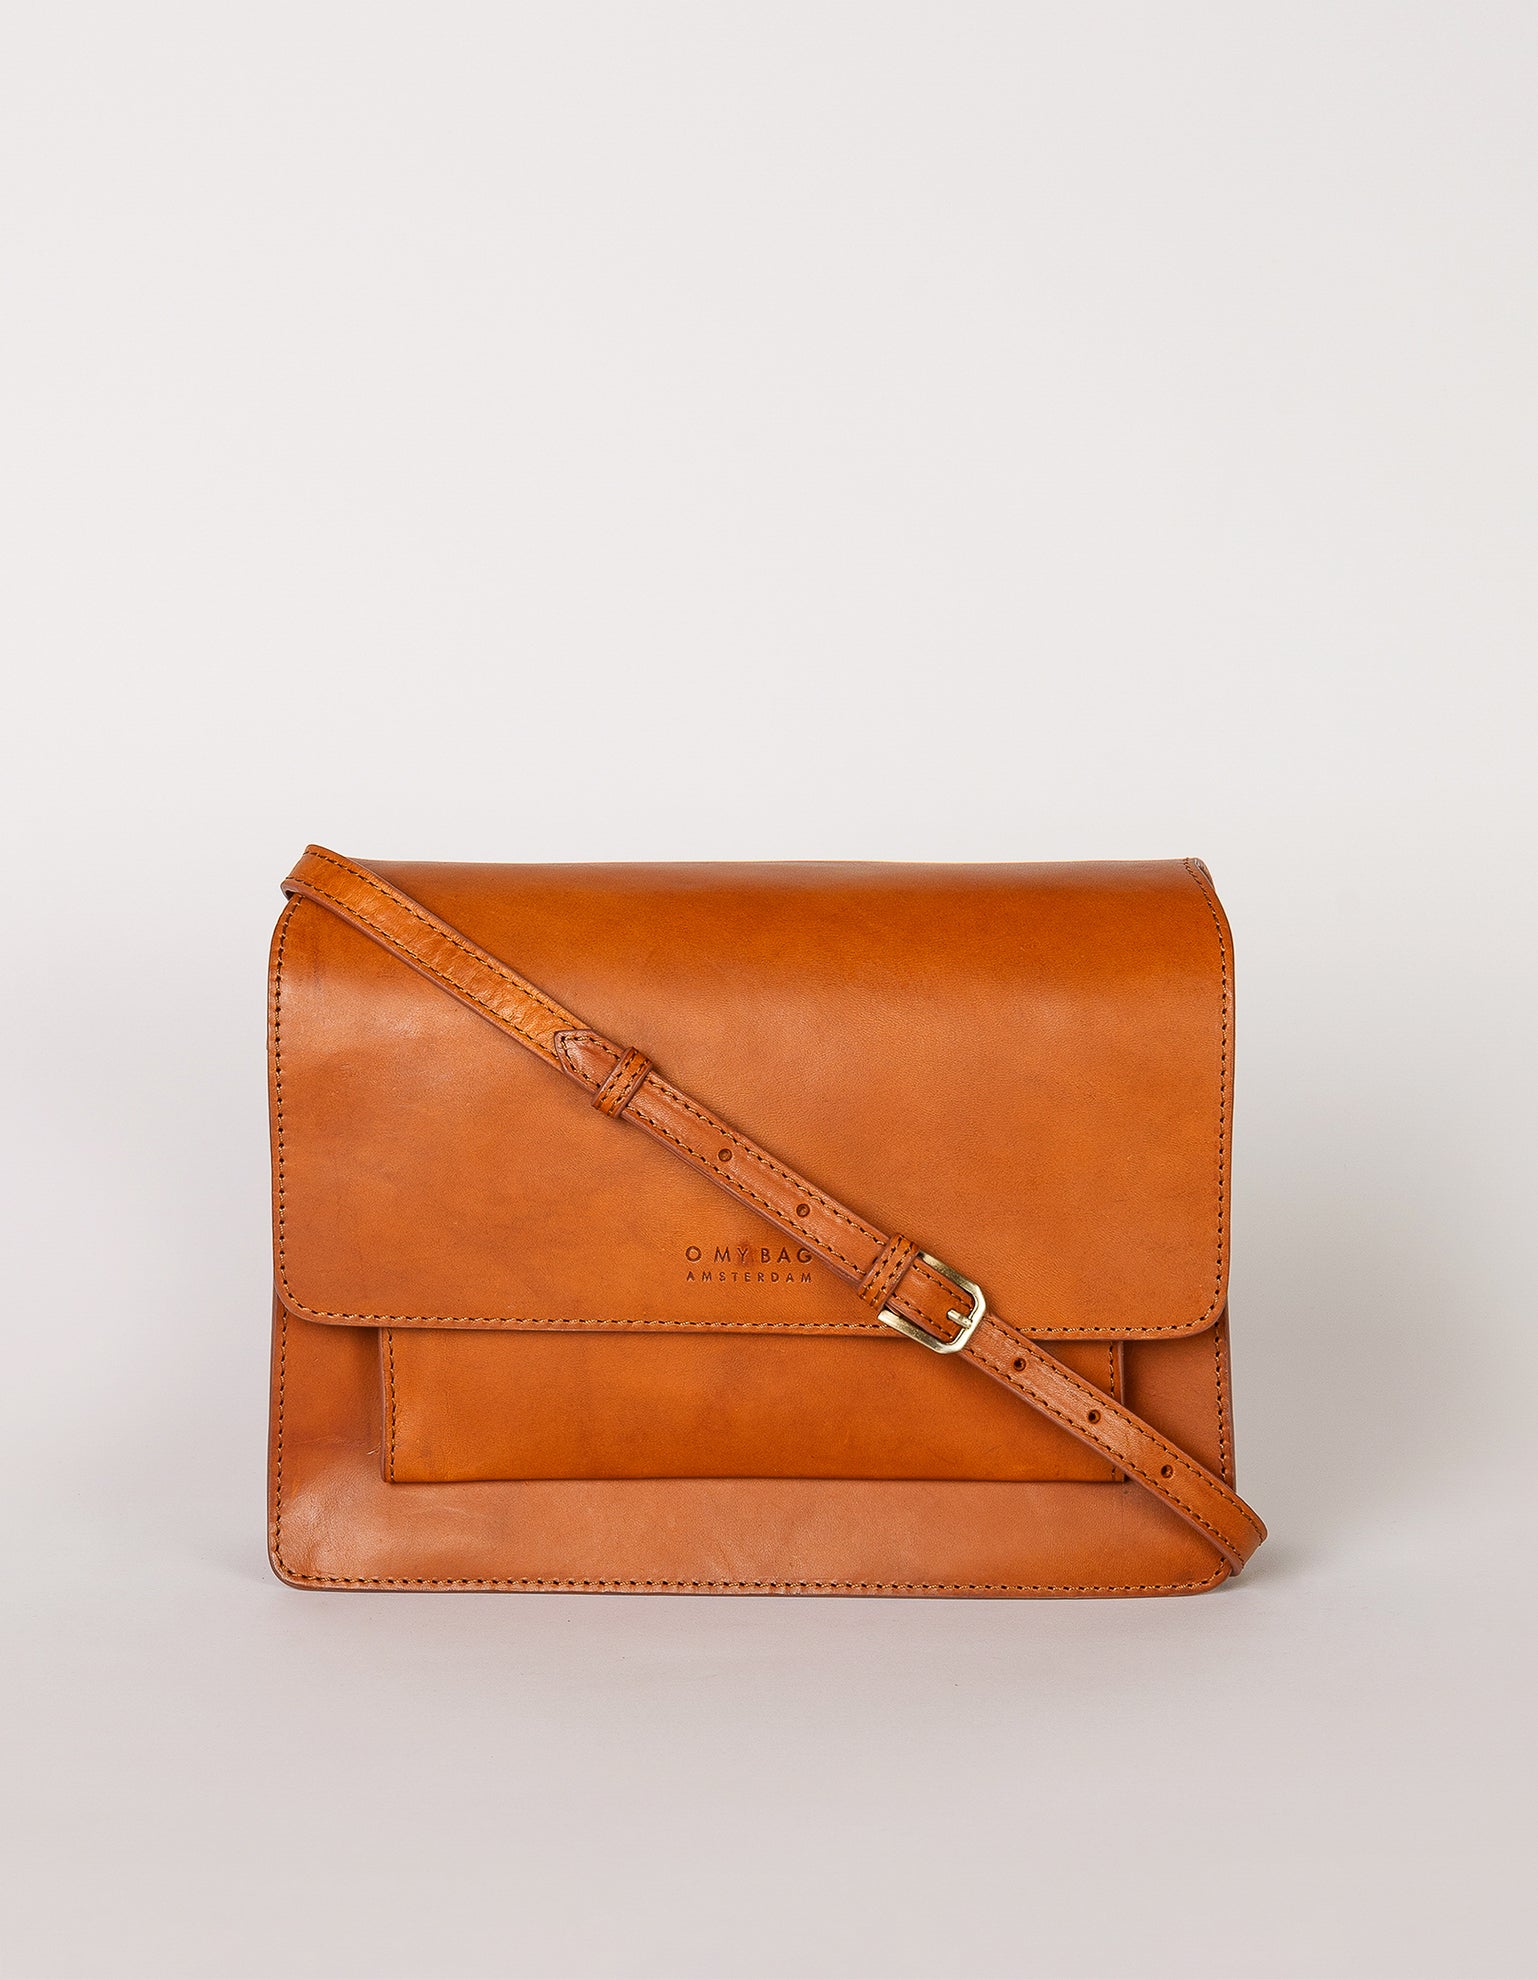 Harper Crossbody |  Classic Leather